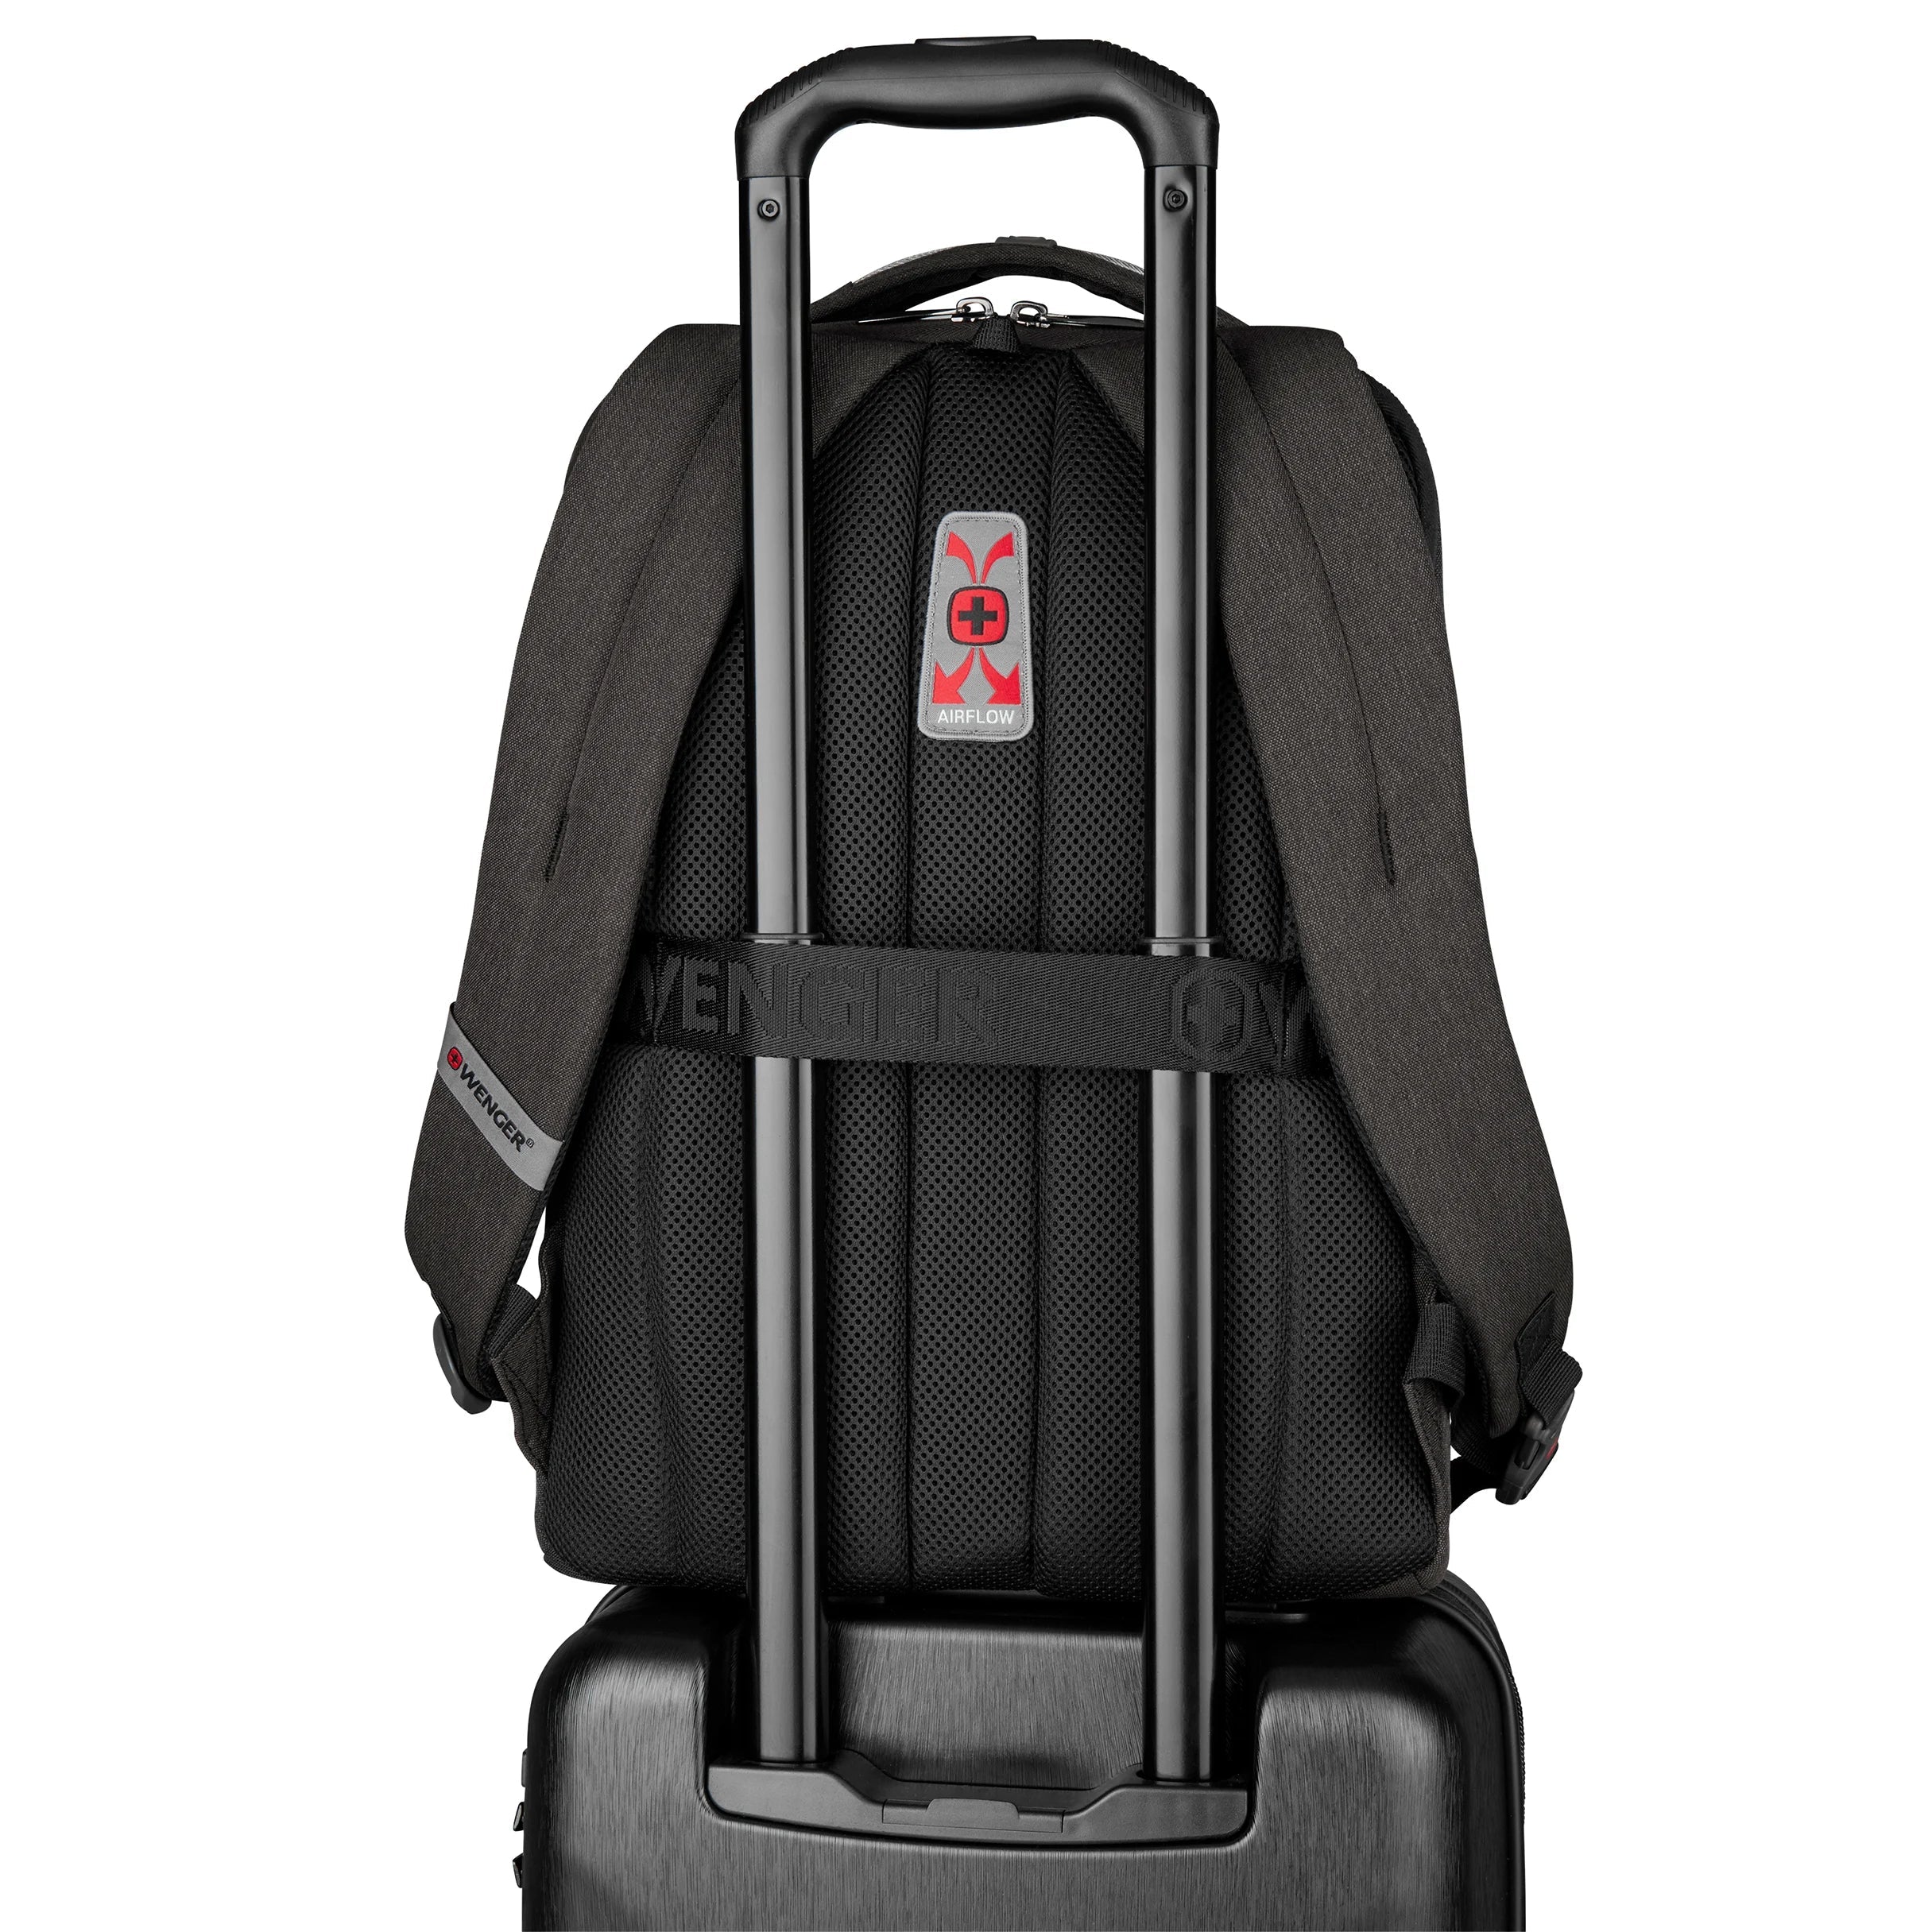 Wenger Business Backpacks MX Professional Backpack 45 cm - Heather Grey